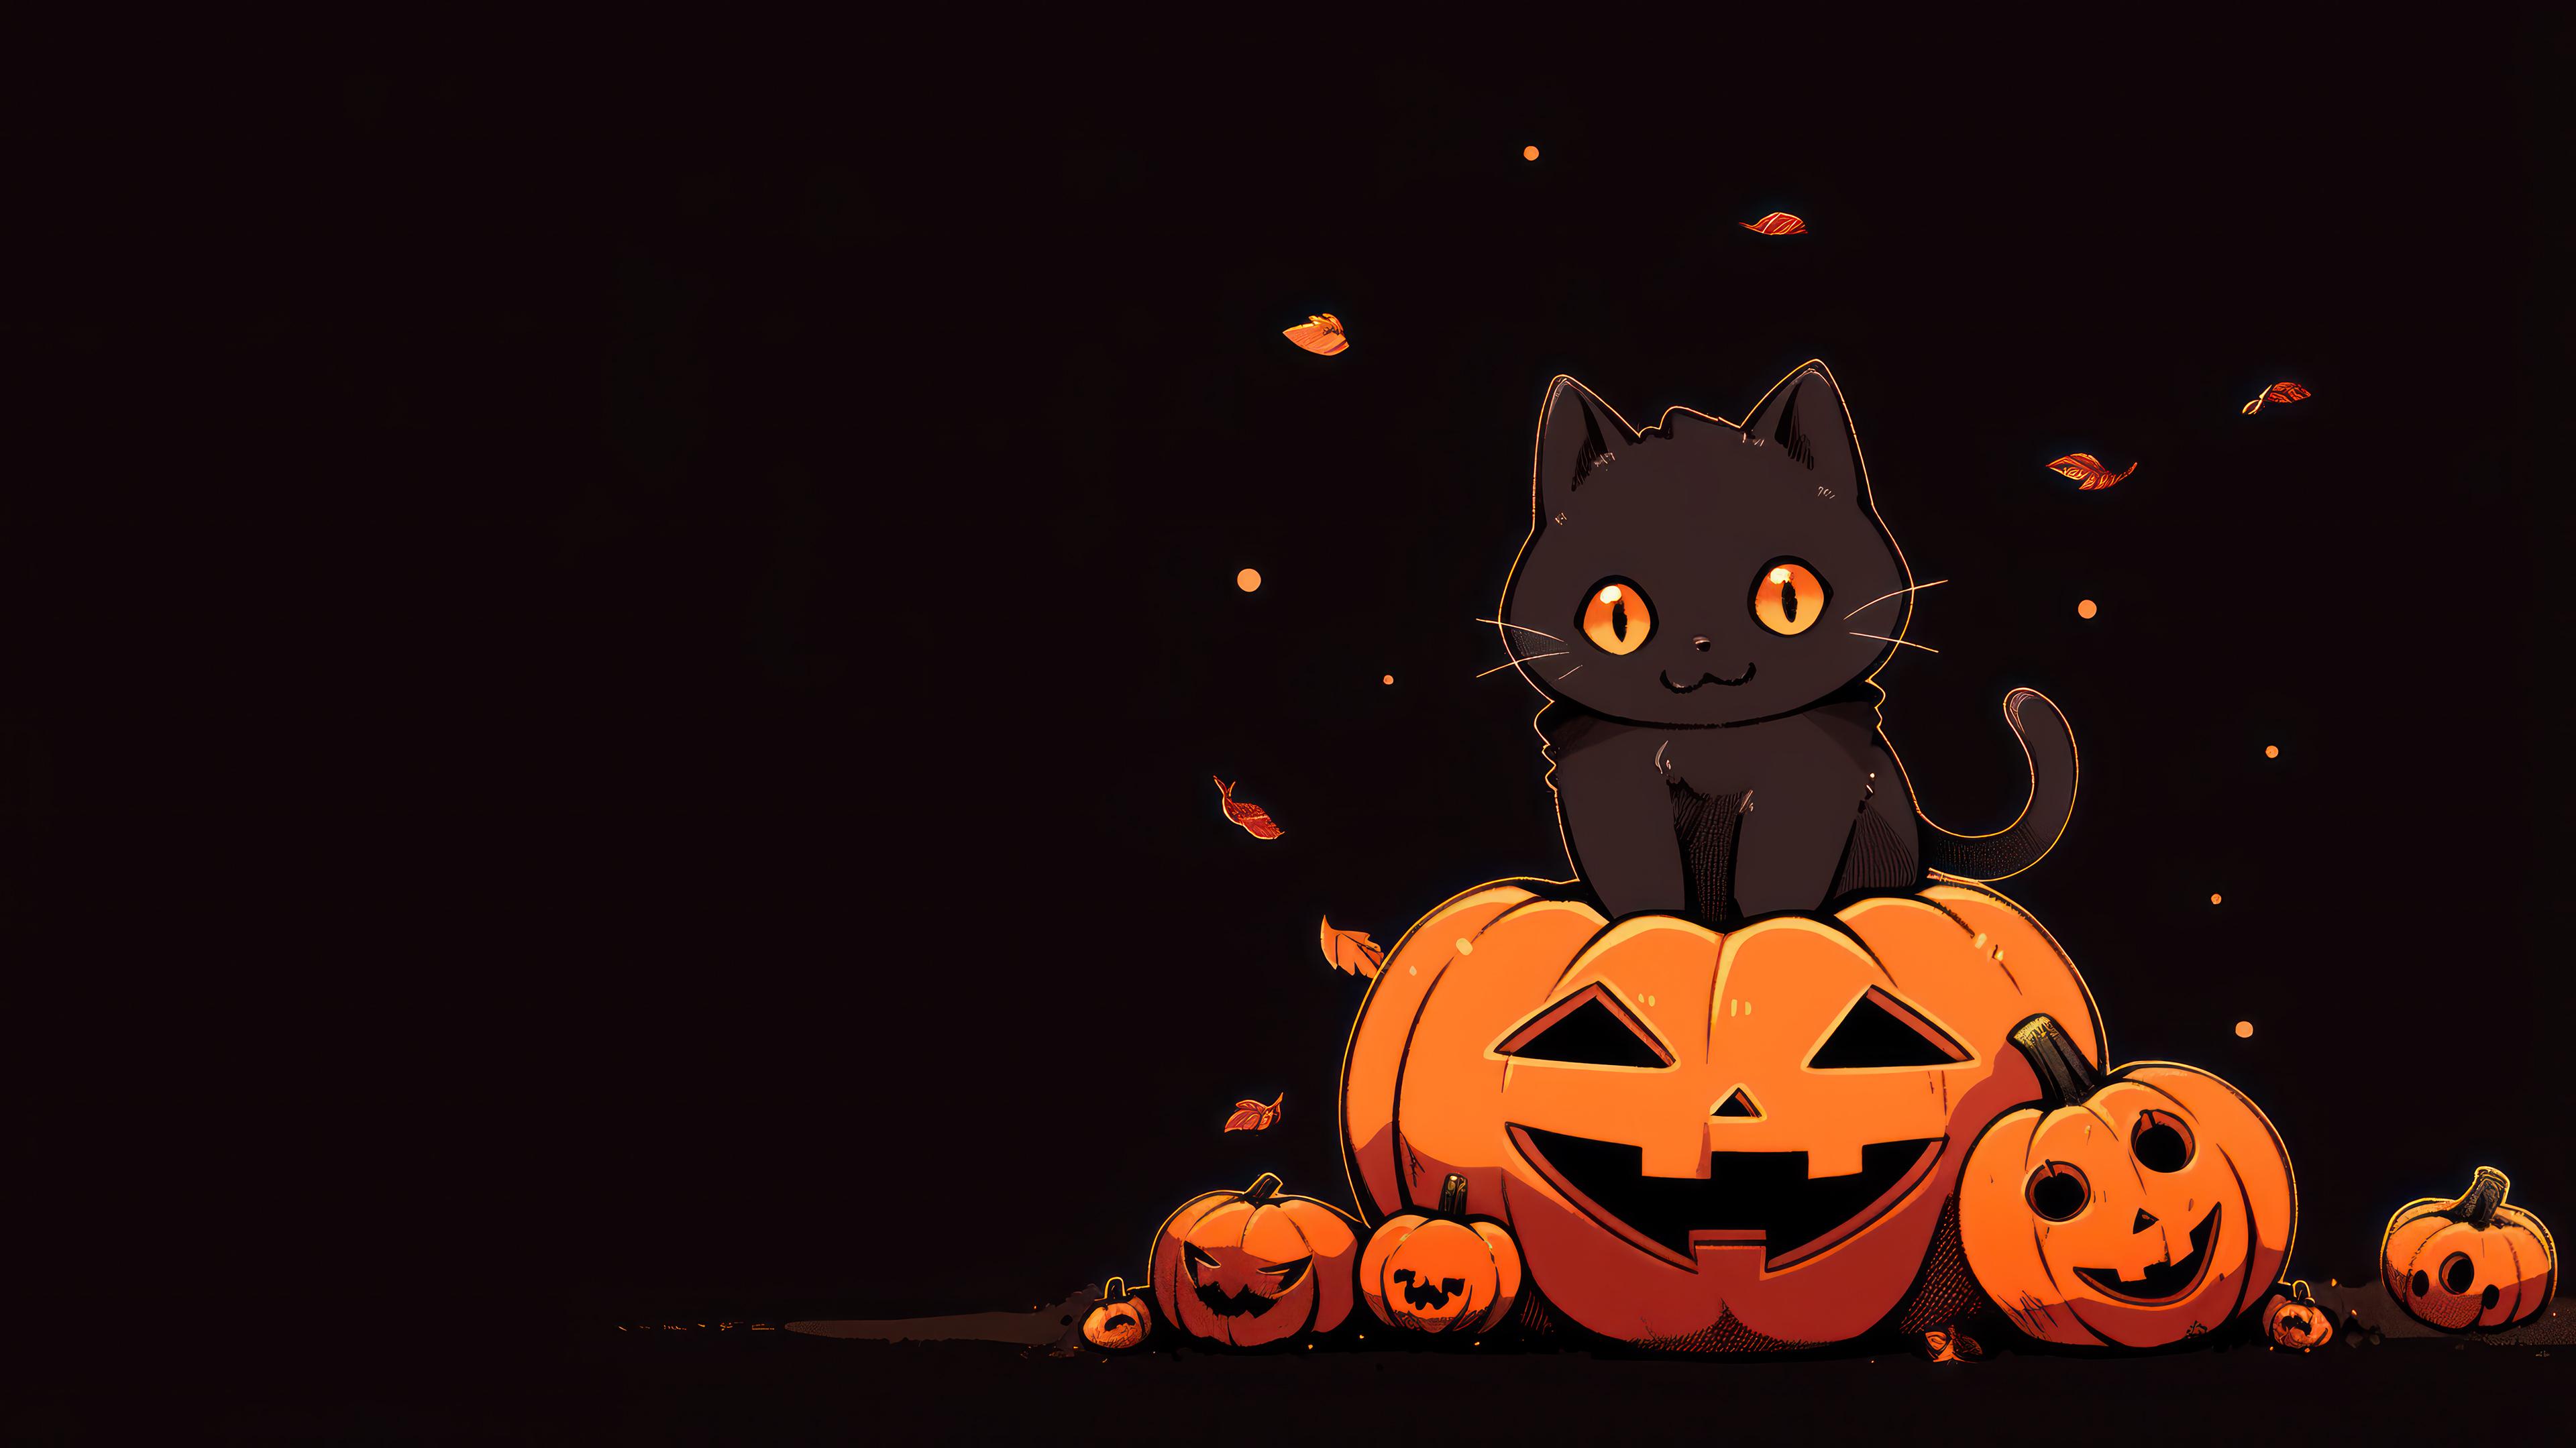 Jack O Lantern Pumpkin Black Cat Halloween 4k Wallpaper iPhone HD